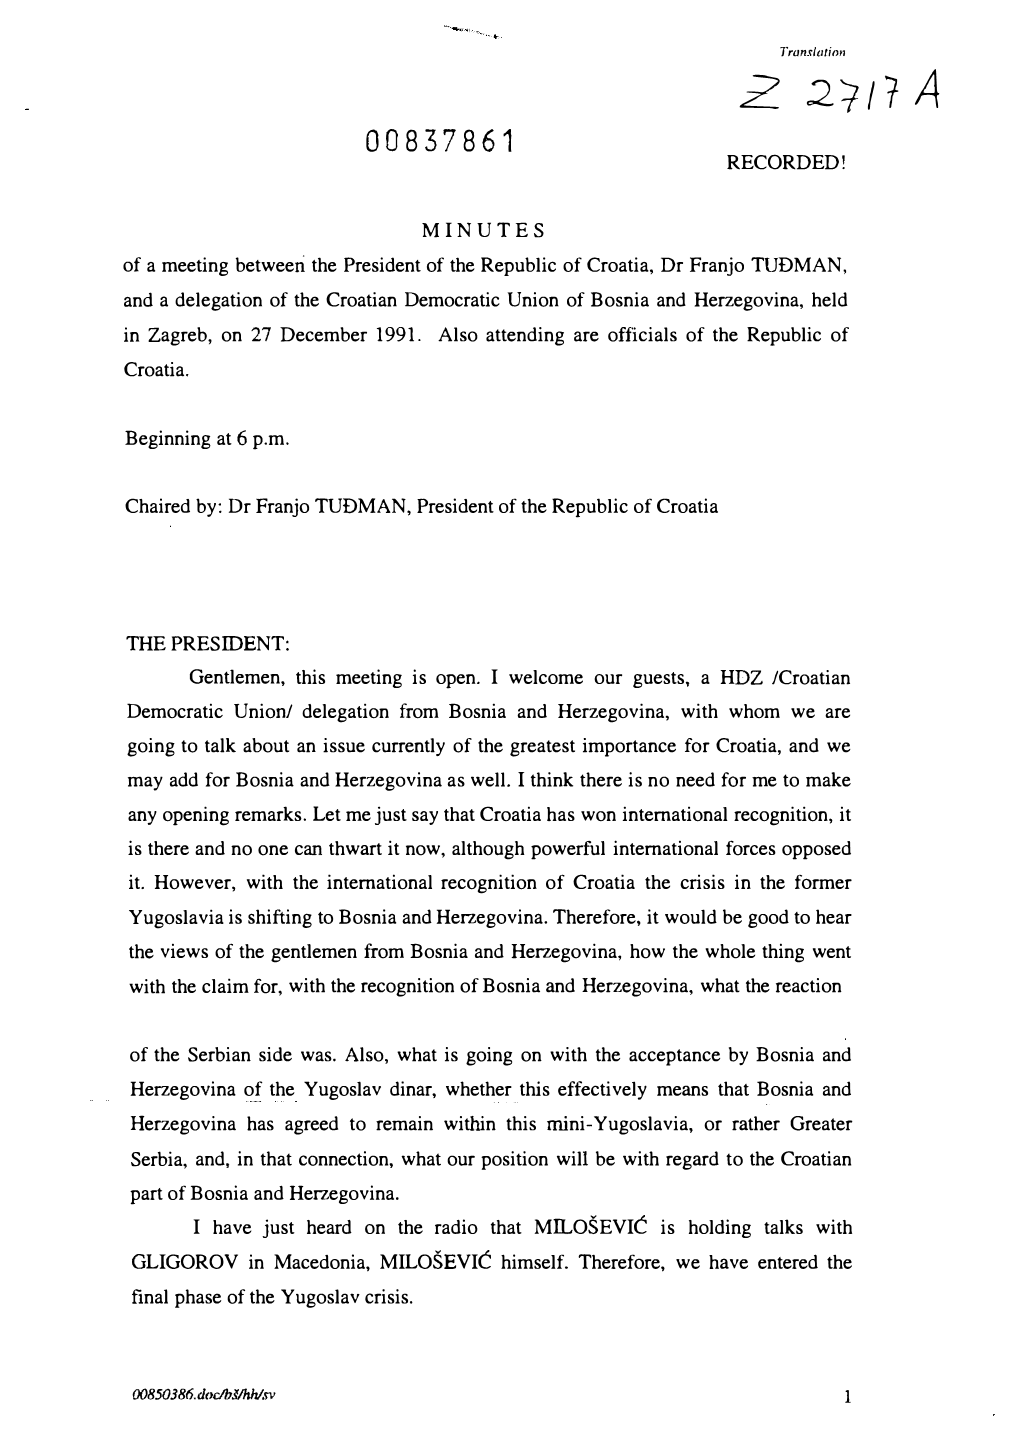 Minutes of President Tuđman's Meeting with HDZ Bih Delegation